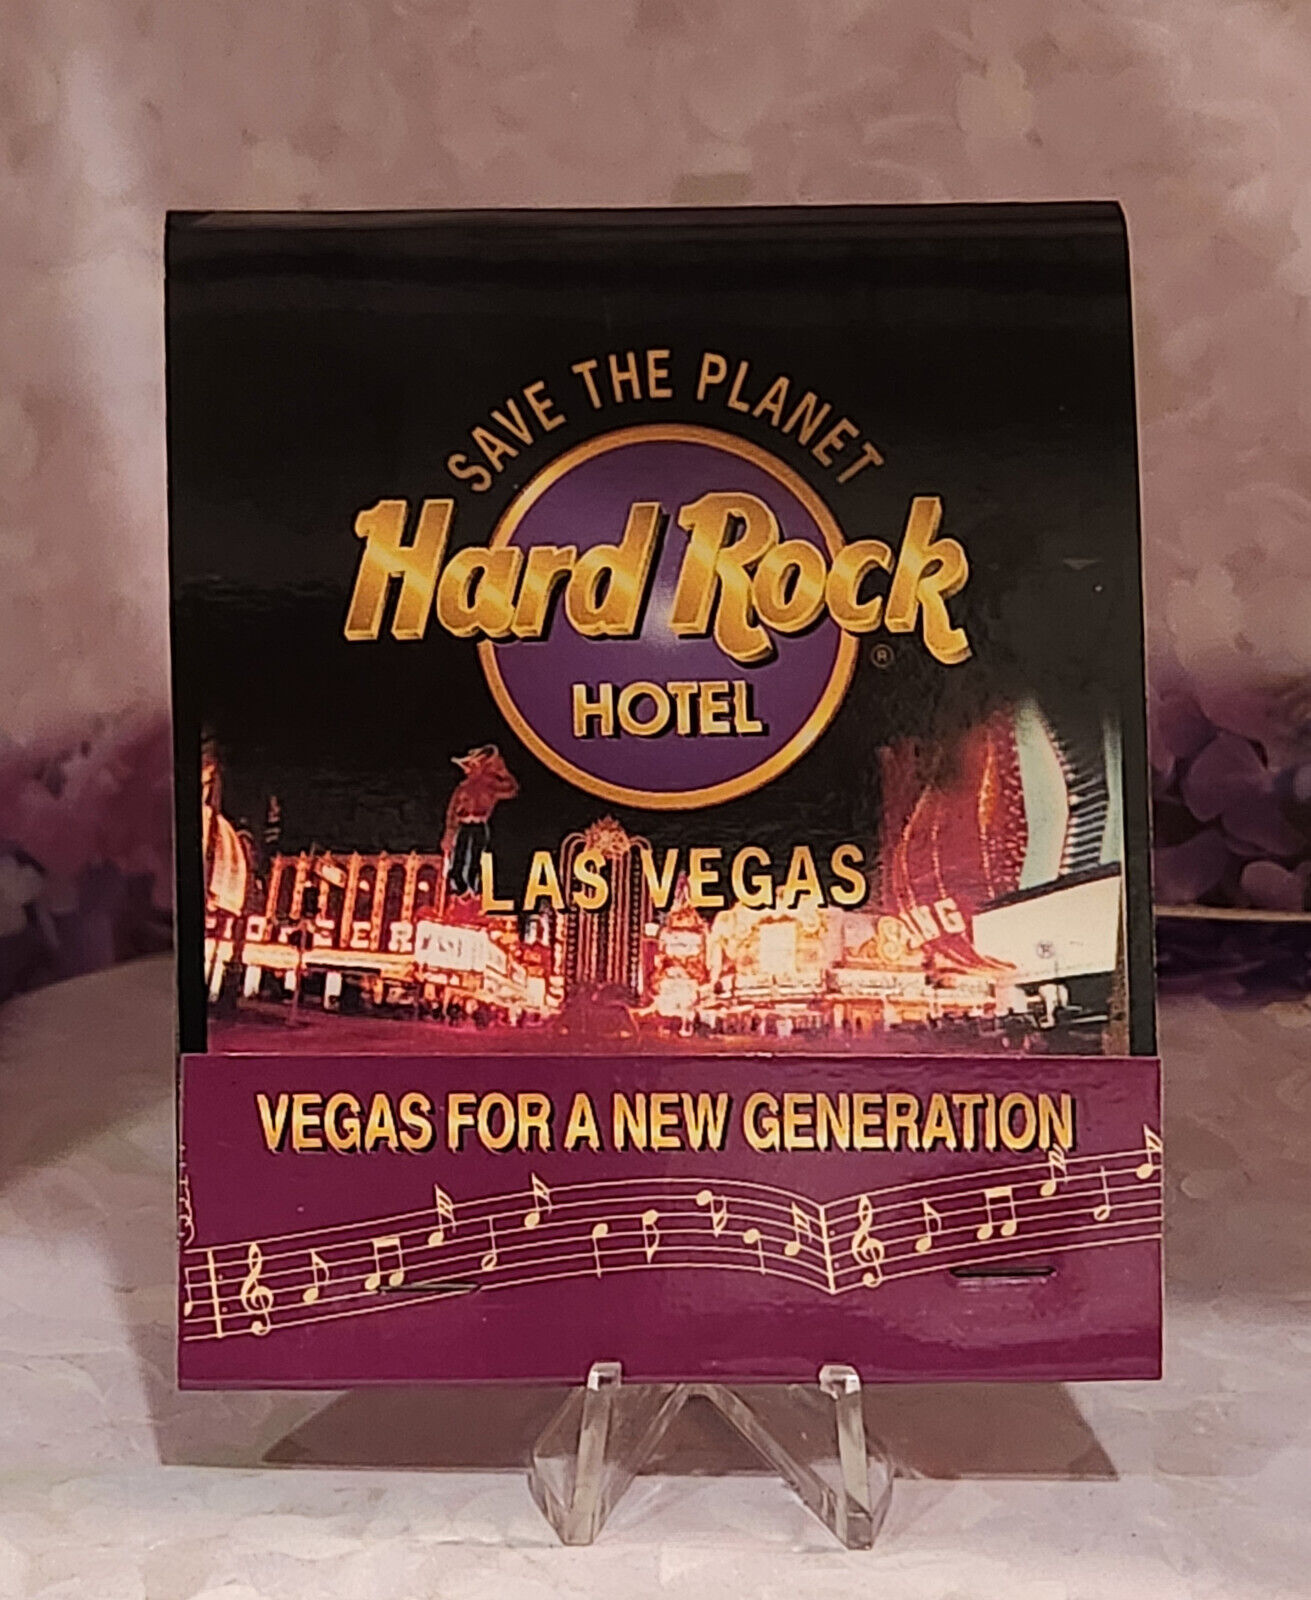 LAS VEGAS'S HARD ROCK HOTEL Match Box-Vintage Matches Memorabilia-refurbished